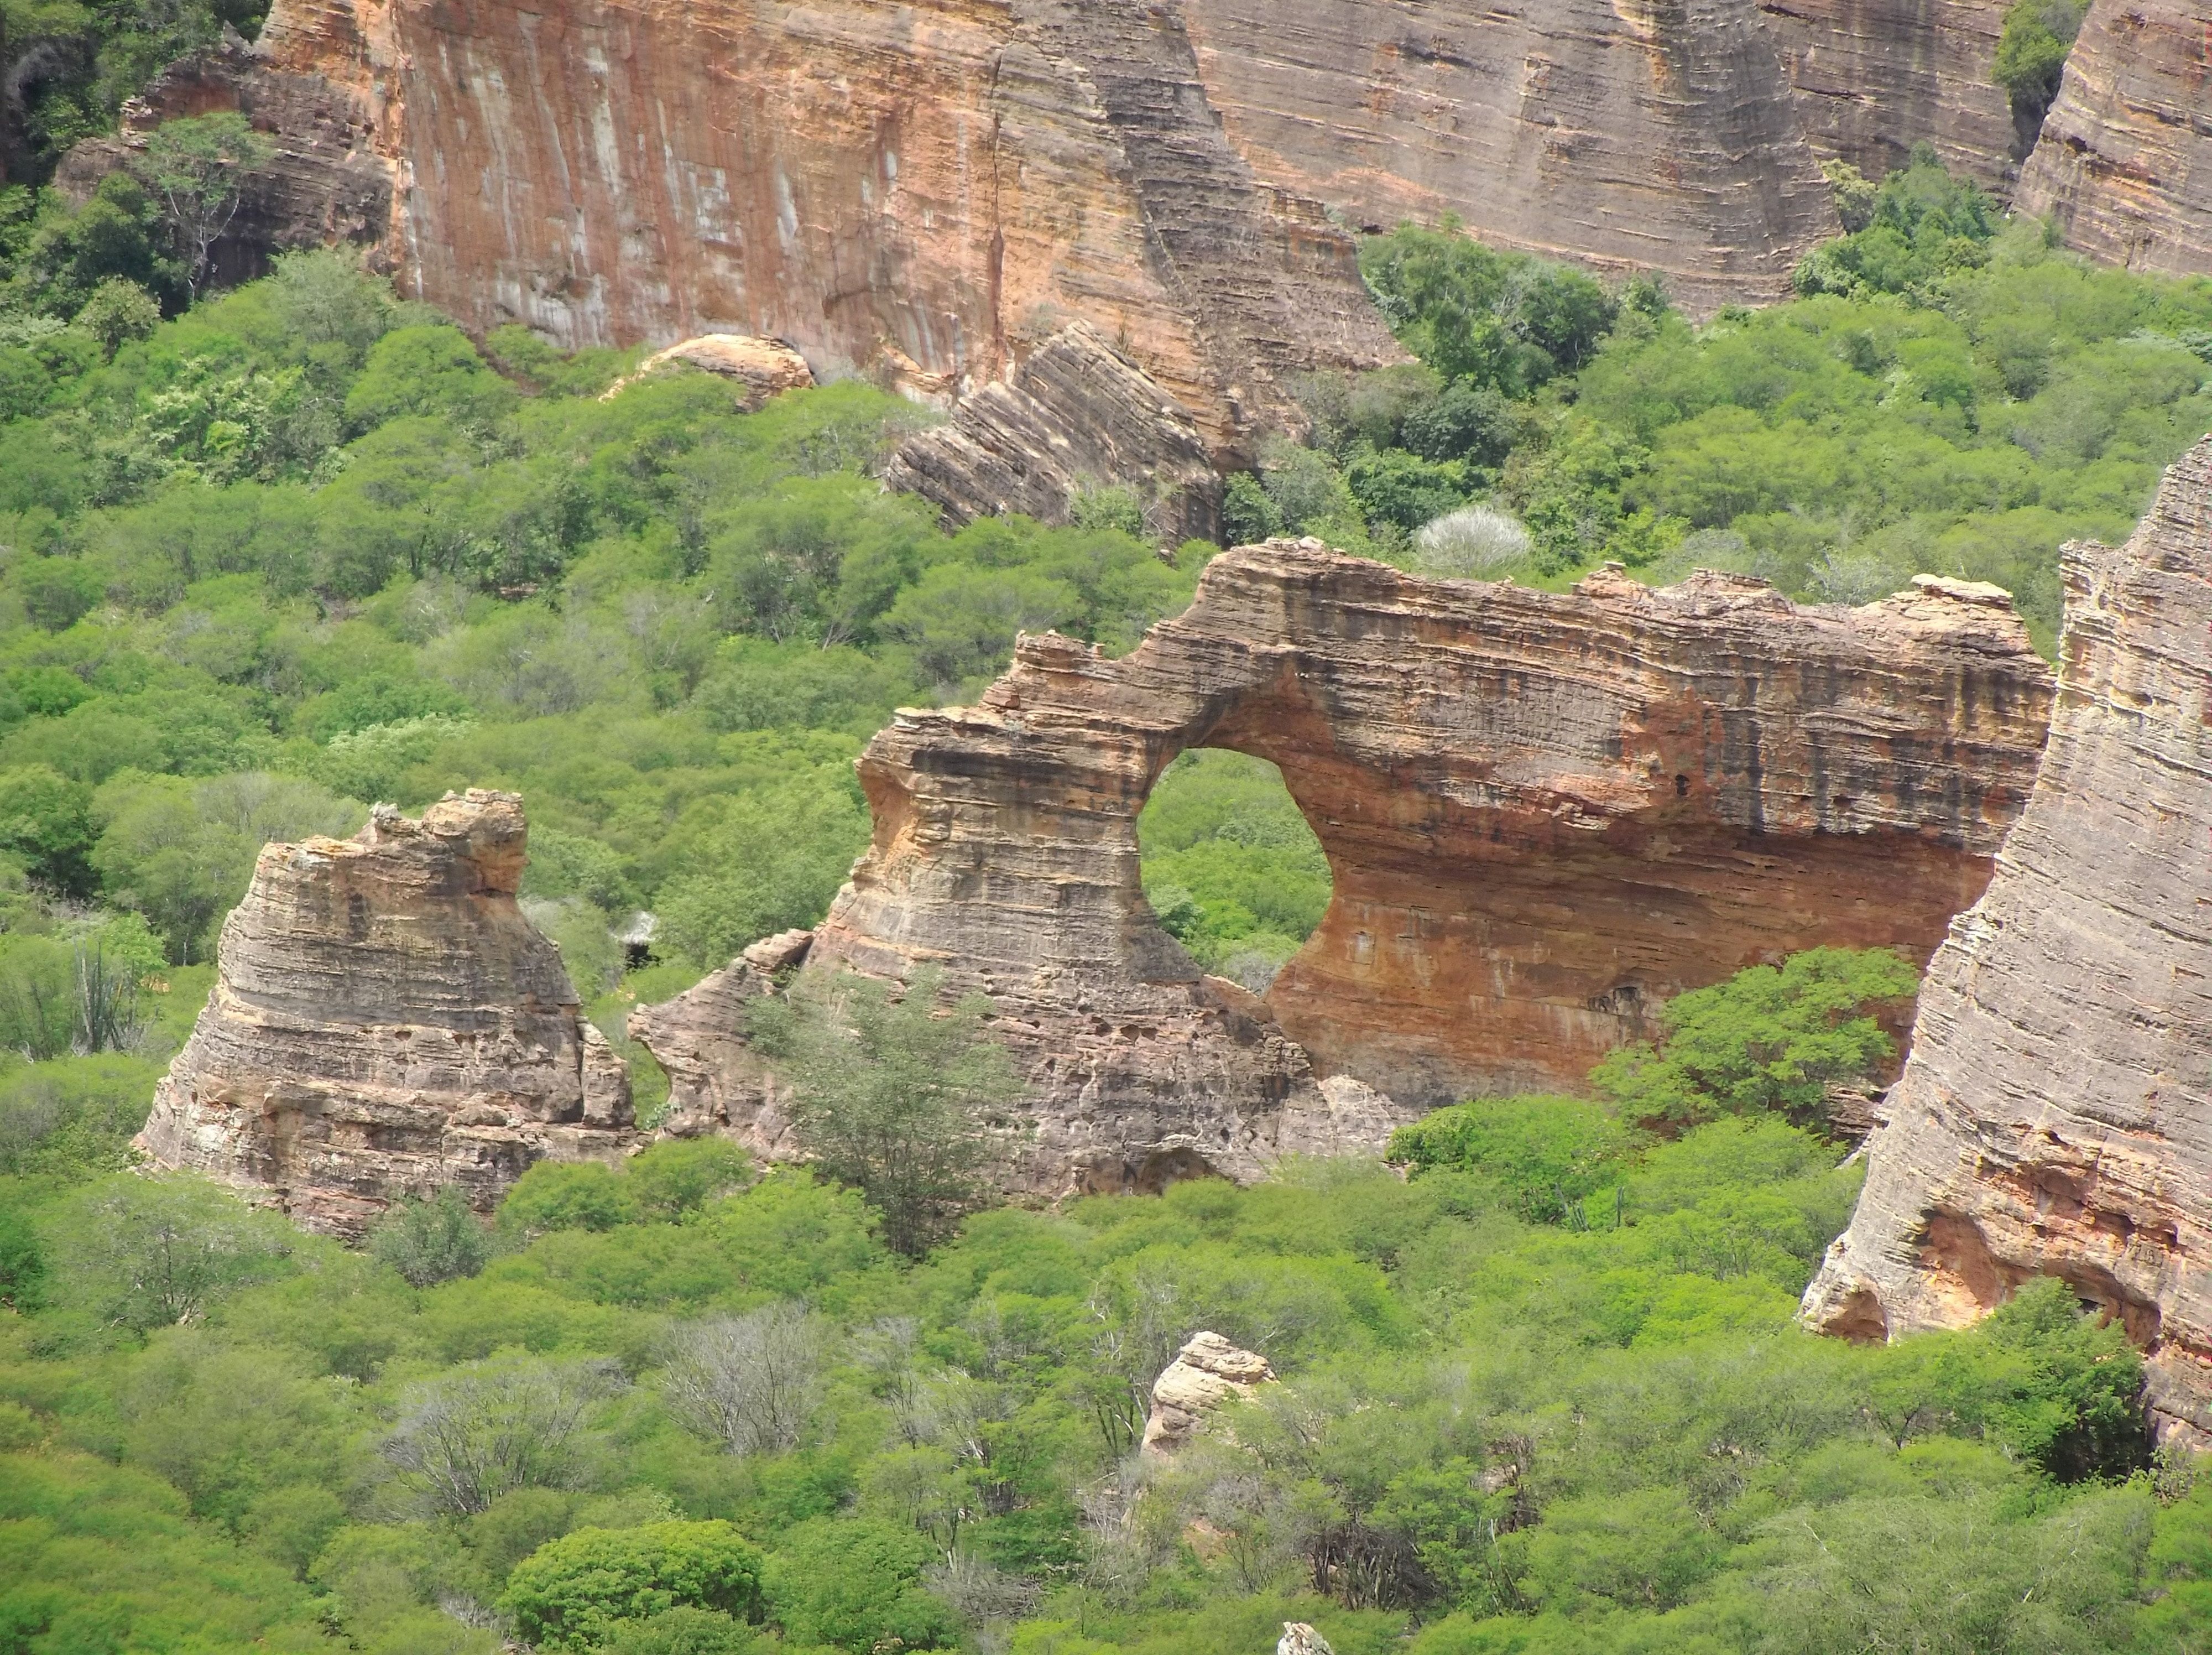 Rock formations surrounded by vegetation in Serra da Capivara National Park Brazil